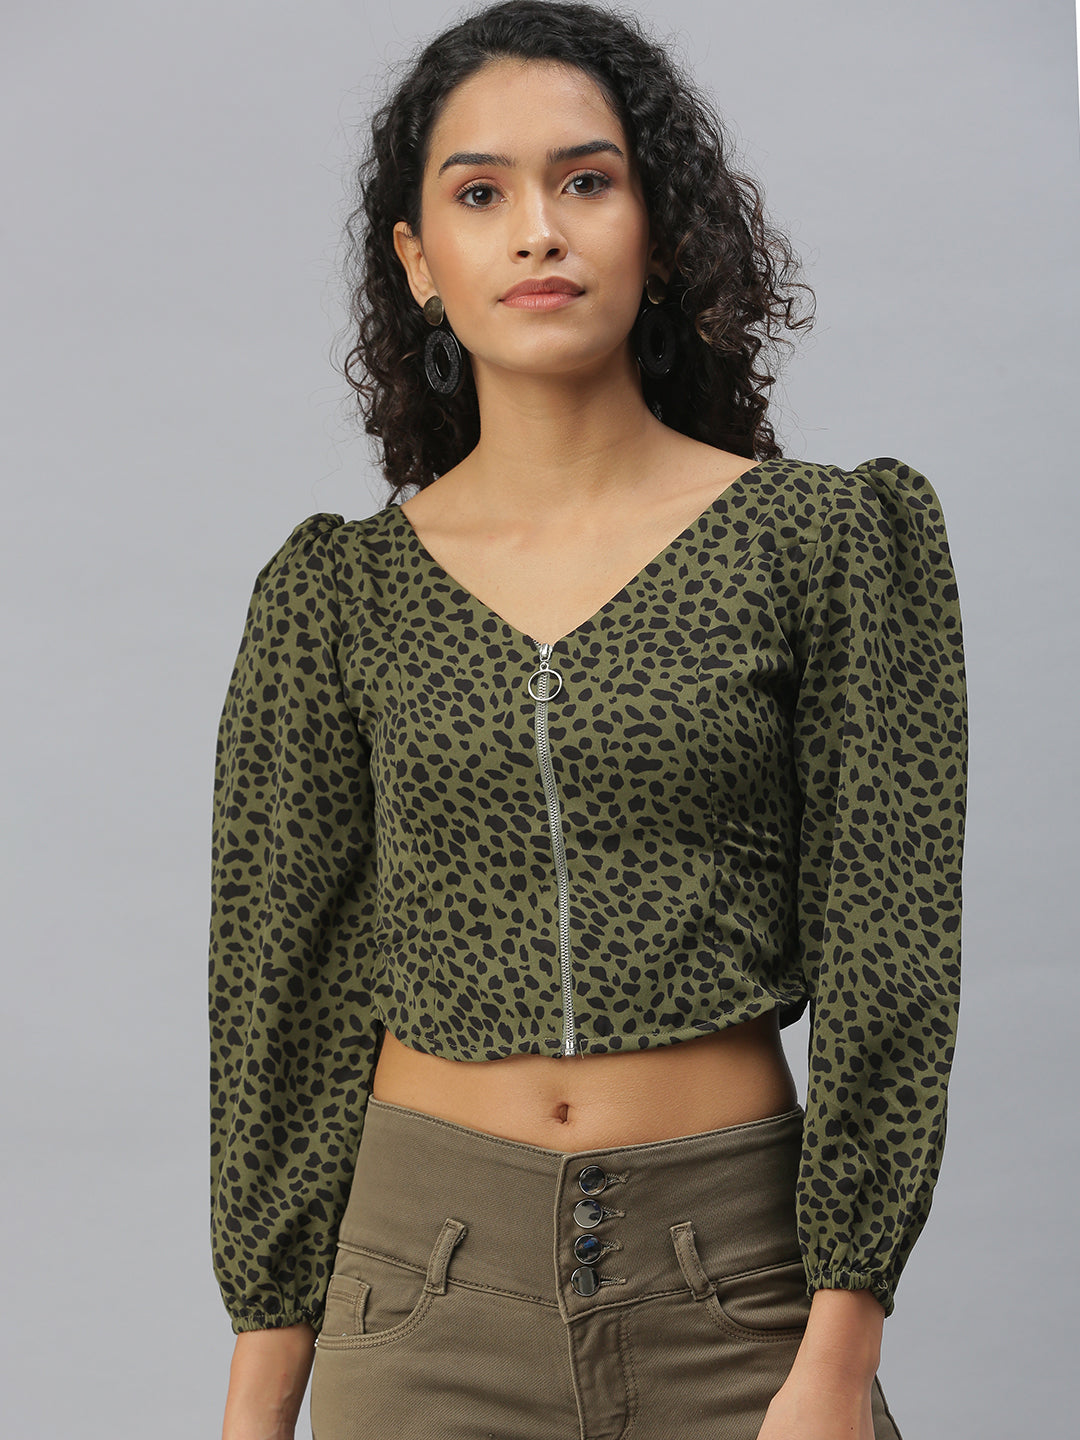 Women's Green Printed Tops